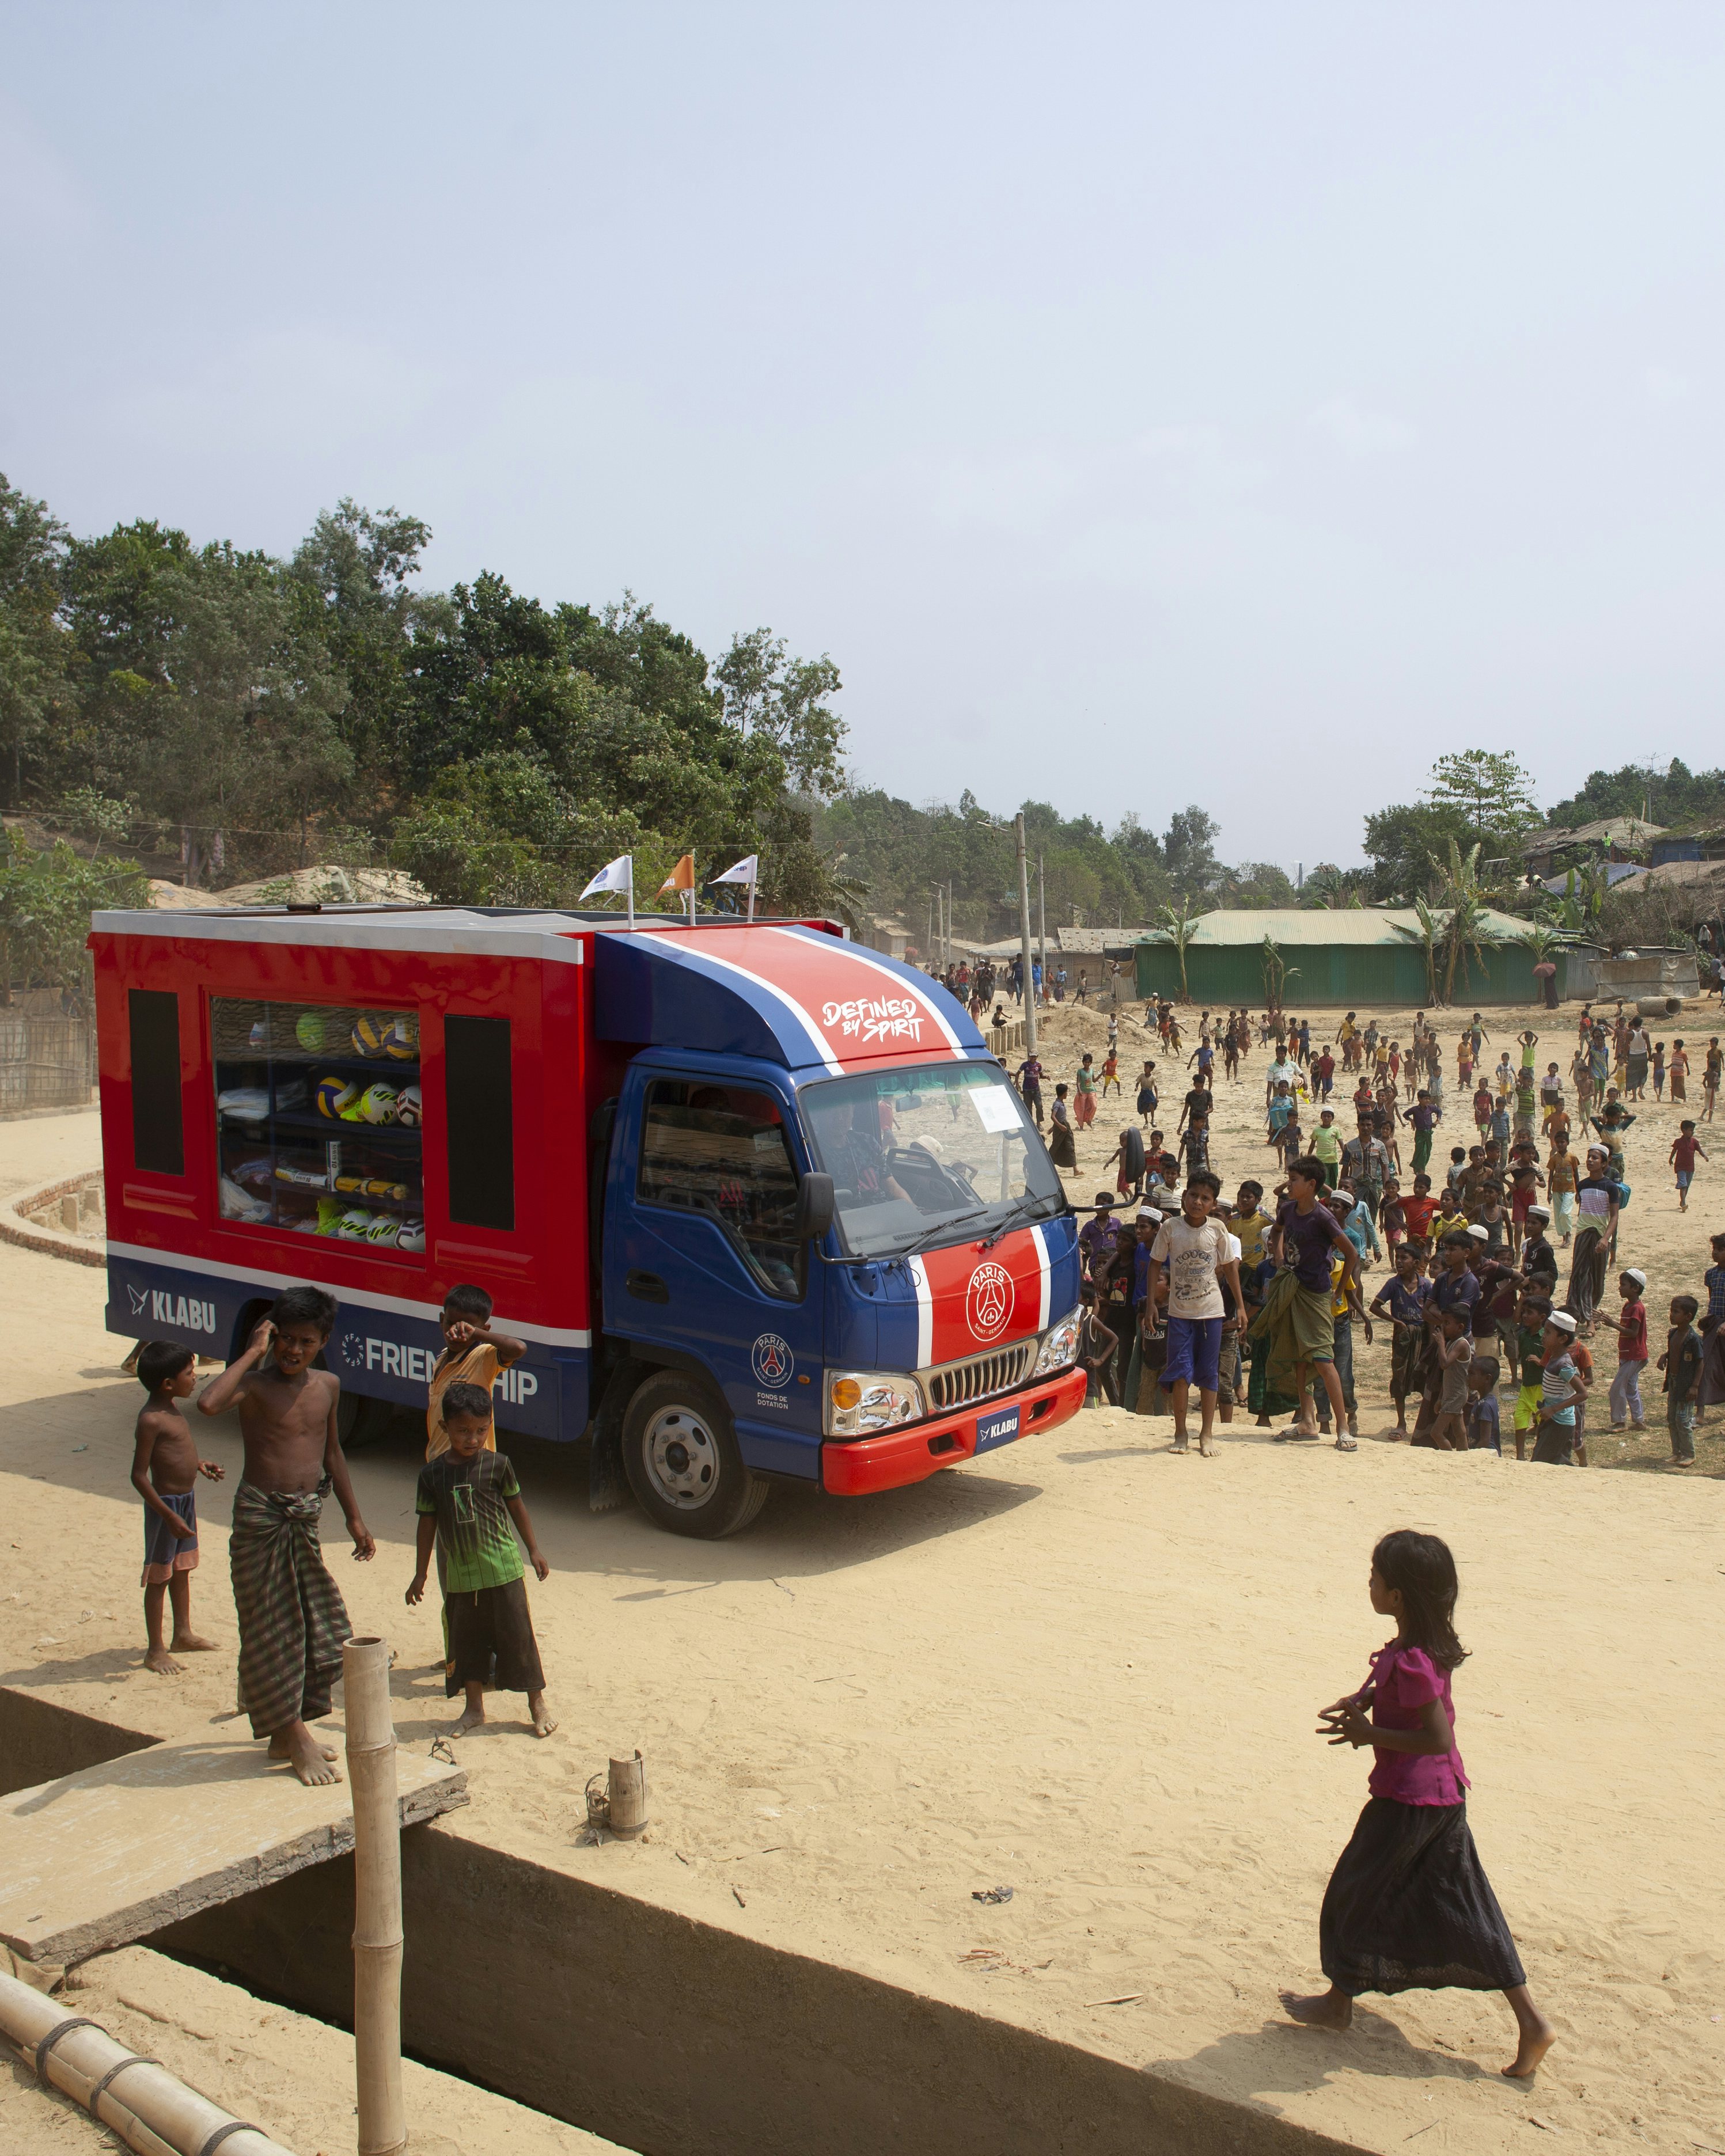 MSL in the Cox's Bazar Refugee Camp